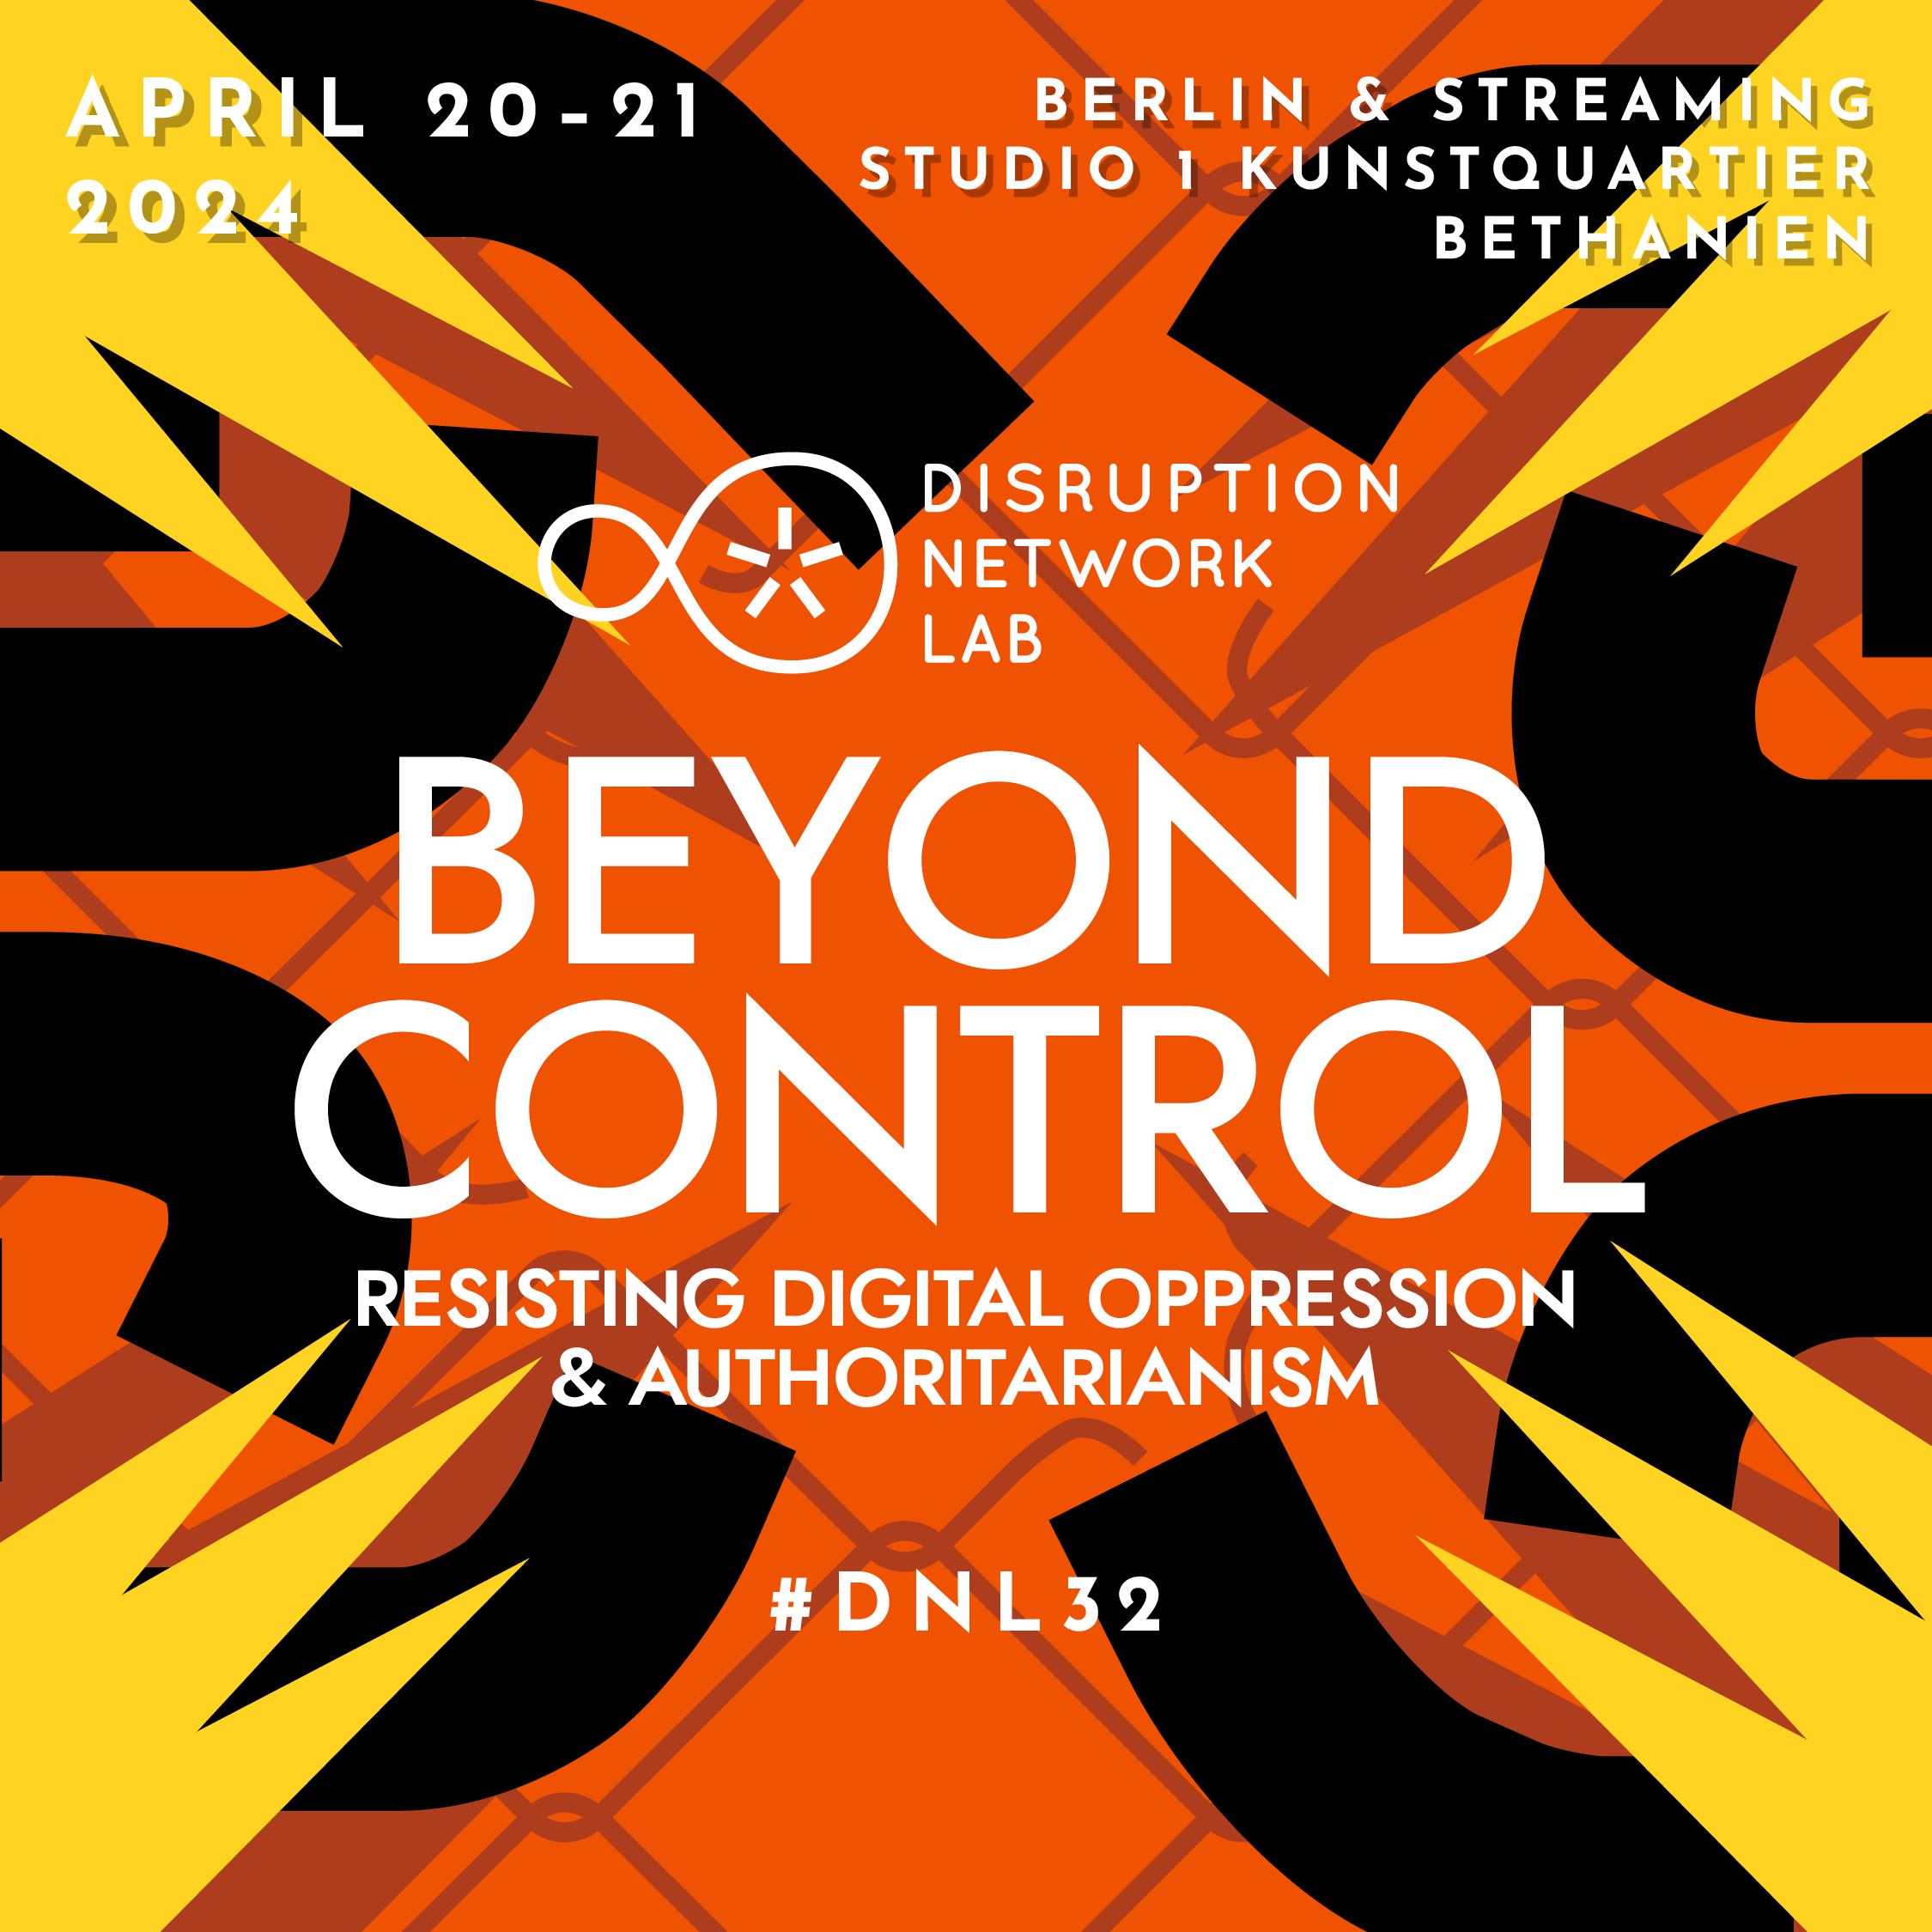 BEYOND CONTROL: Resisting Digital Oppression & Authoritarianism